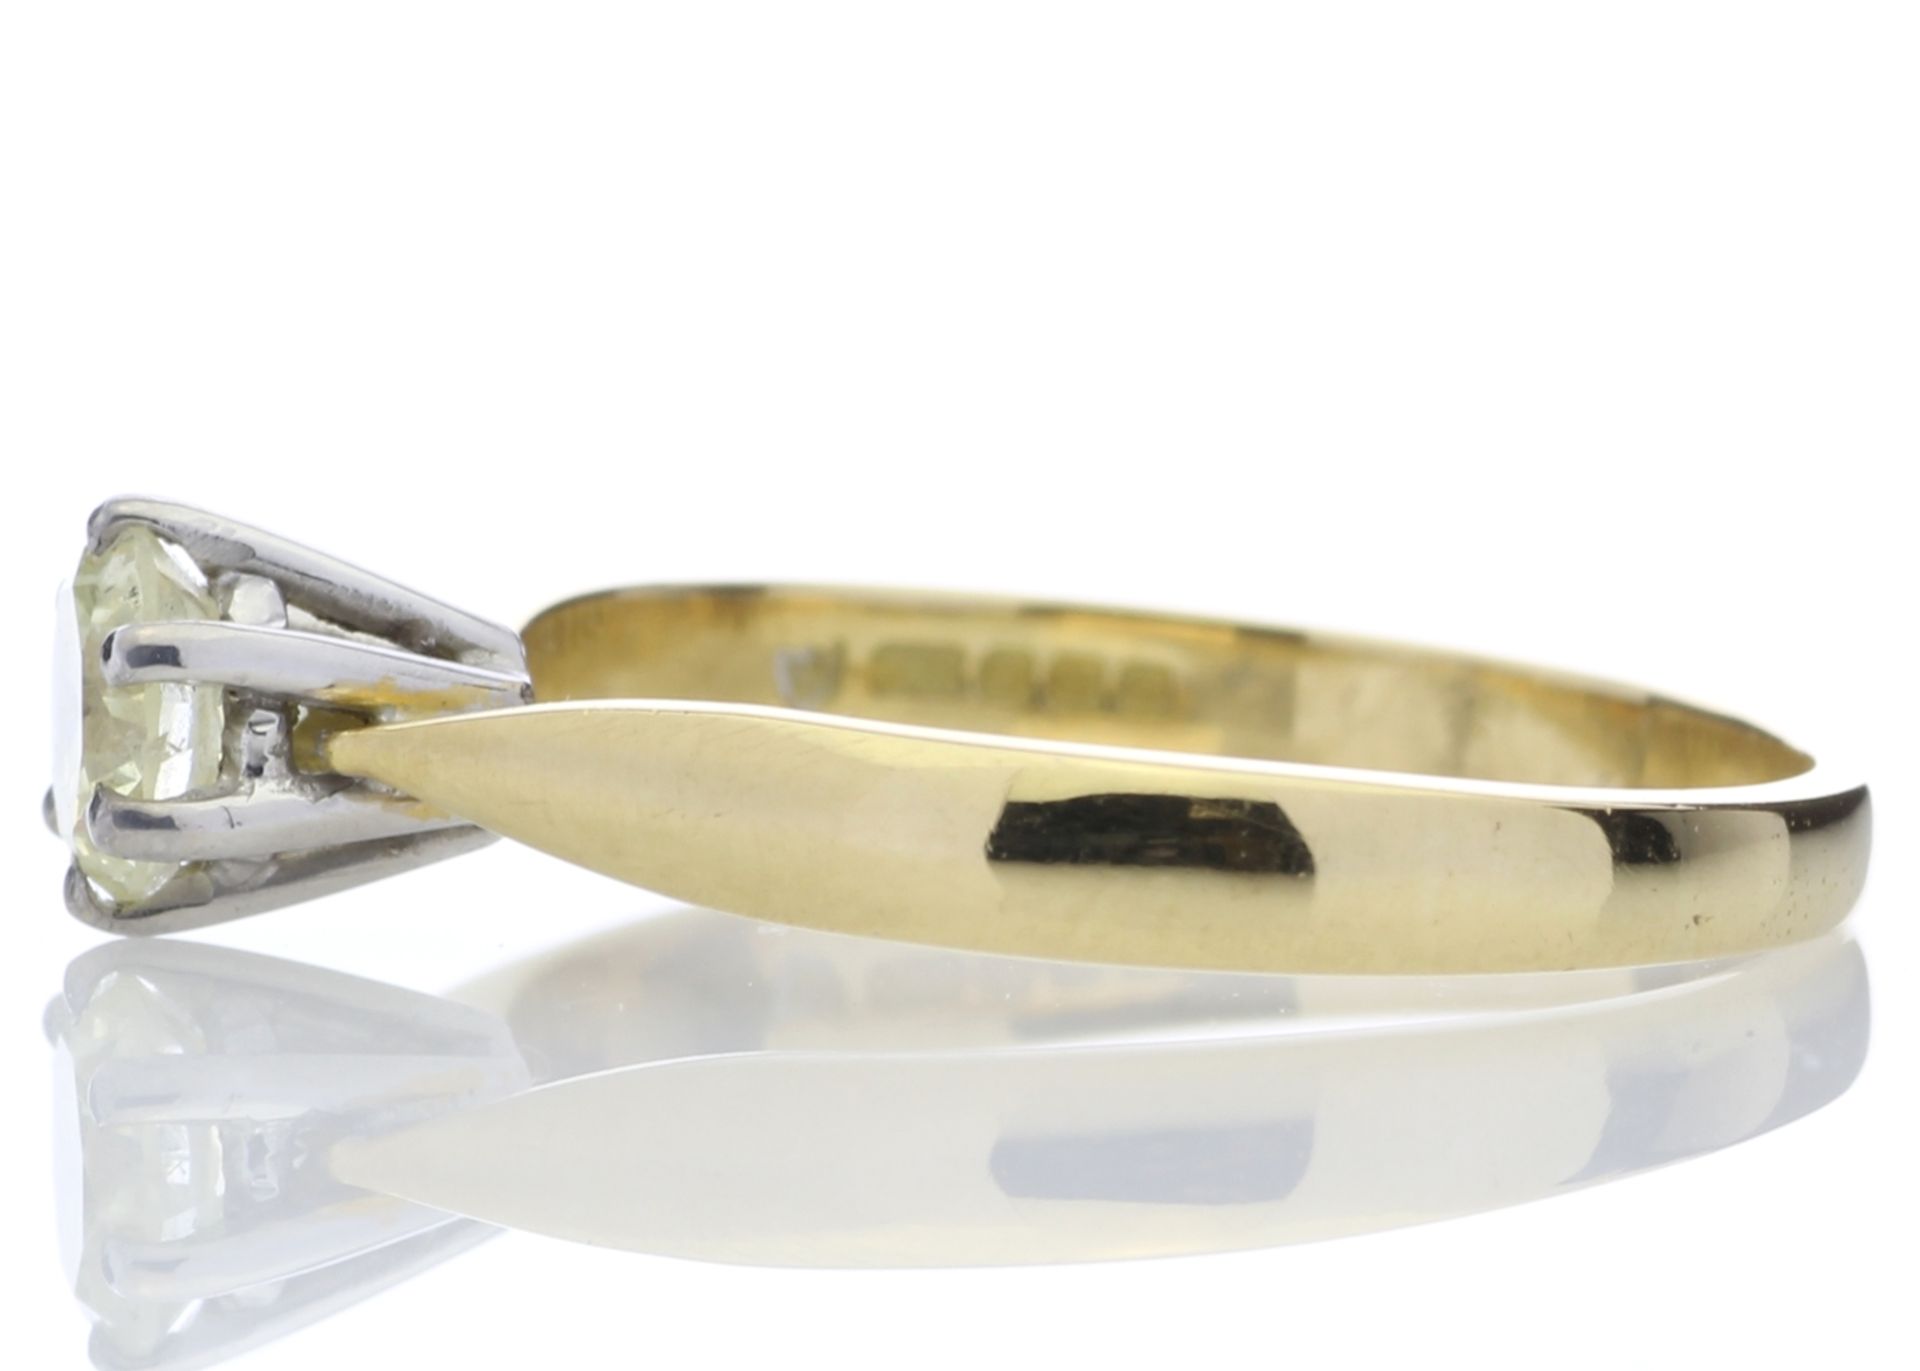 Valued by AGI £2,319.00 - 18ct Single Stone Fancy Vivid Yellow Claw Set Diamond Ring 0.56 Carats - - Image 3 of 4